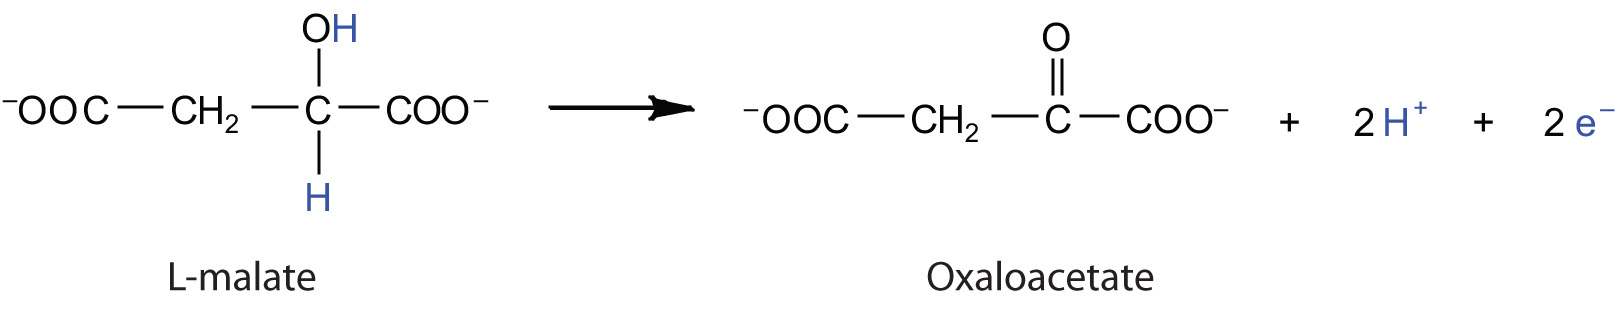 oxidation half reaction